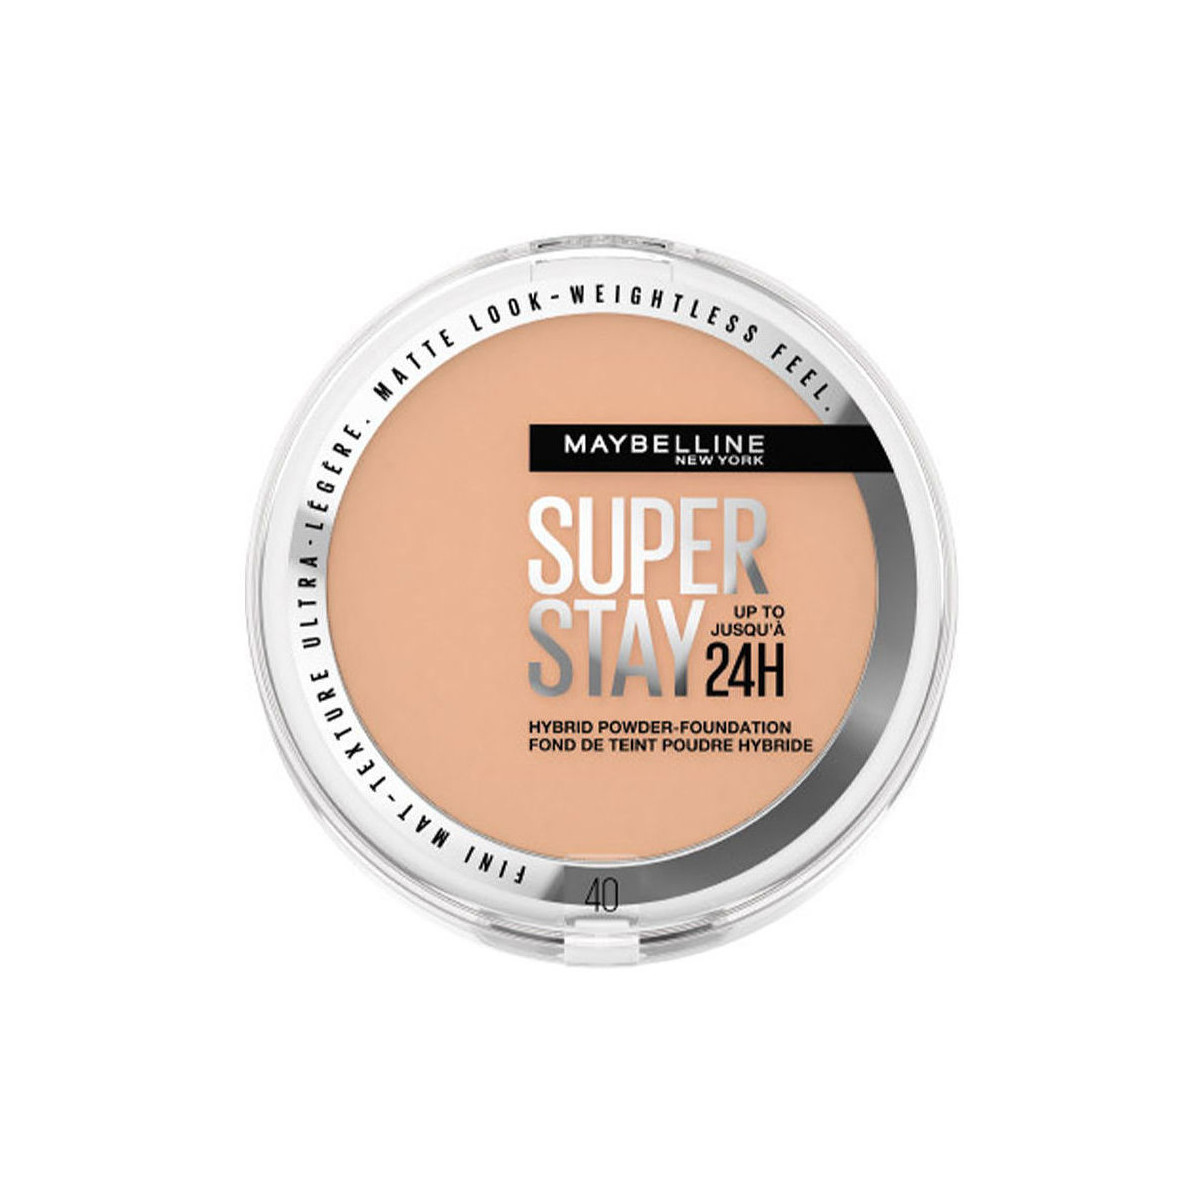 Beauty Blush & Puder Maybelline New York Superstay 24h Hybrid-puder-foundation 40 9 Gr 